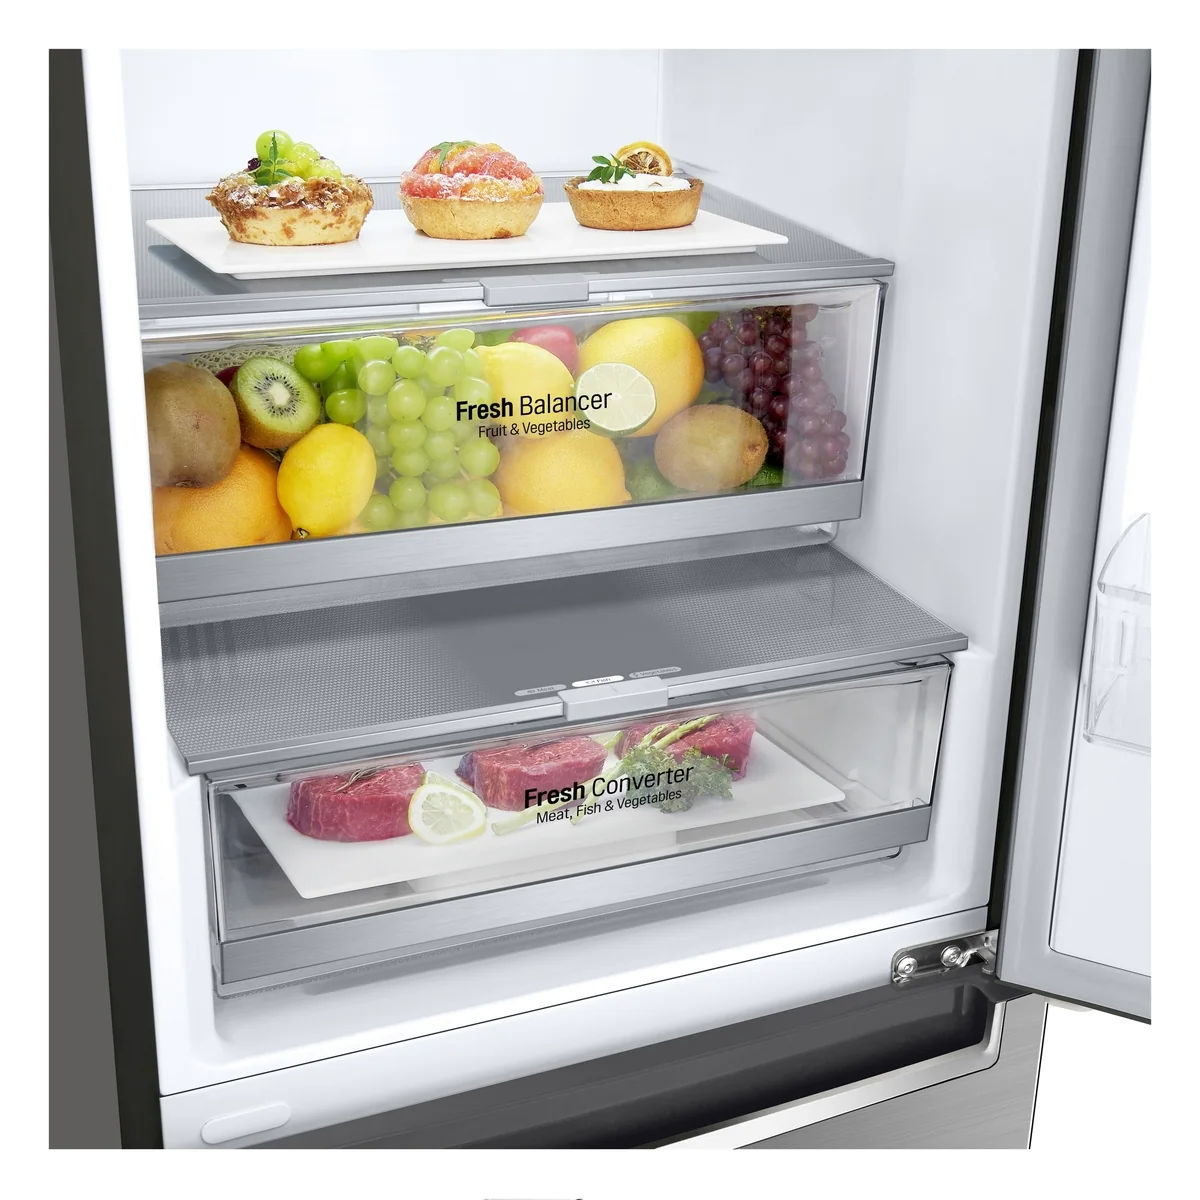 LG M341S17 341L Bottom Freezer Refrigerator 智能變頻式下載式冷凍型雪櫃